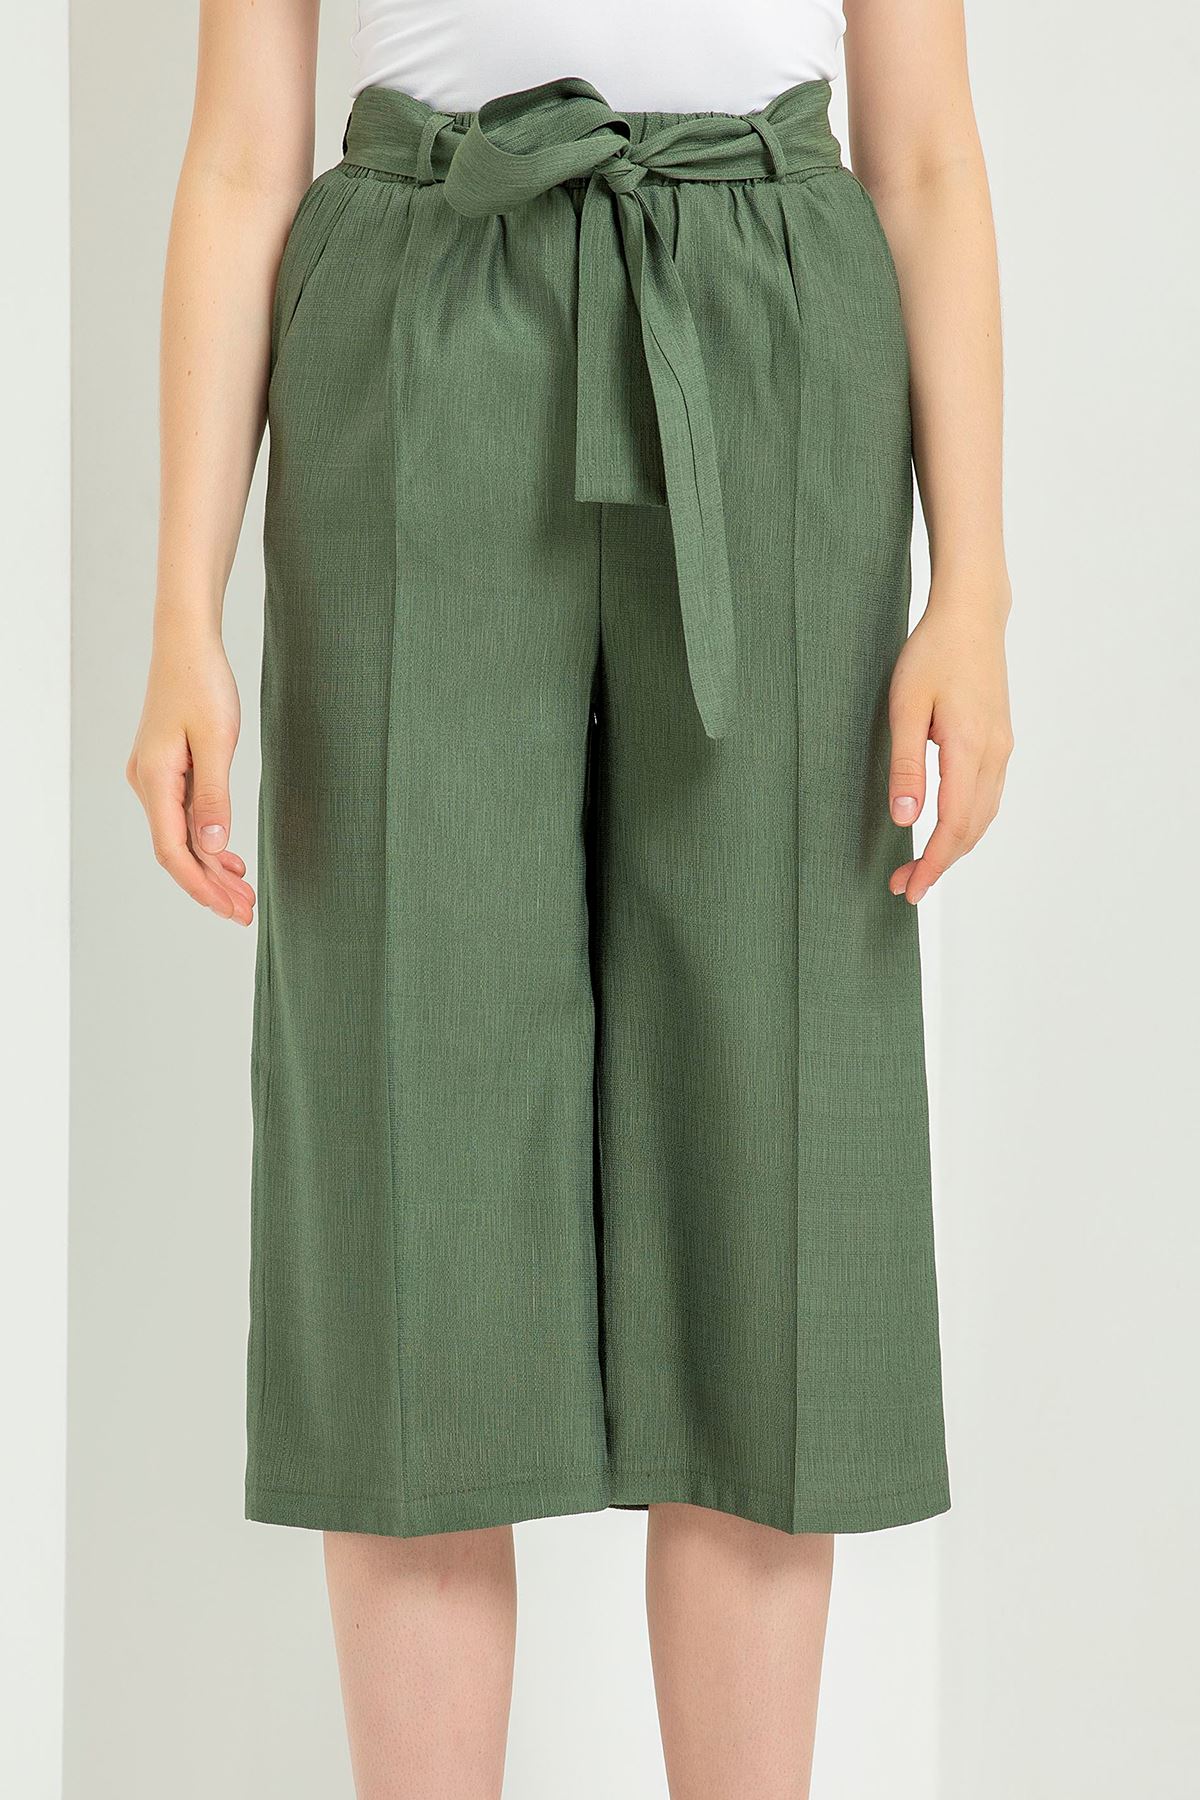 Linen Fabric 3/4 Short Comfy Fit Belted Women'S Trouser - Khaki 